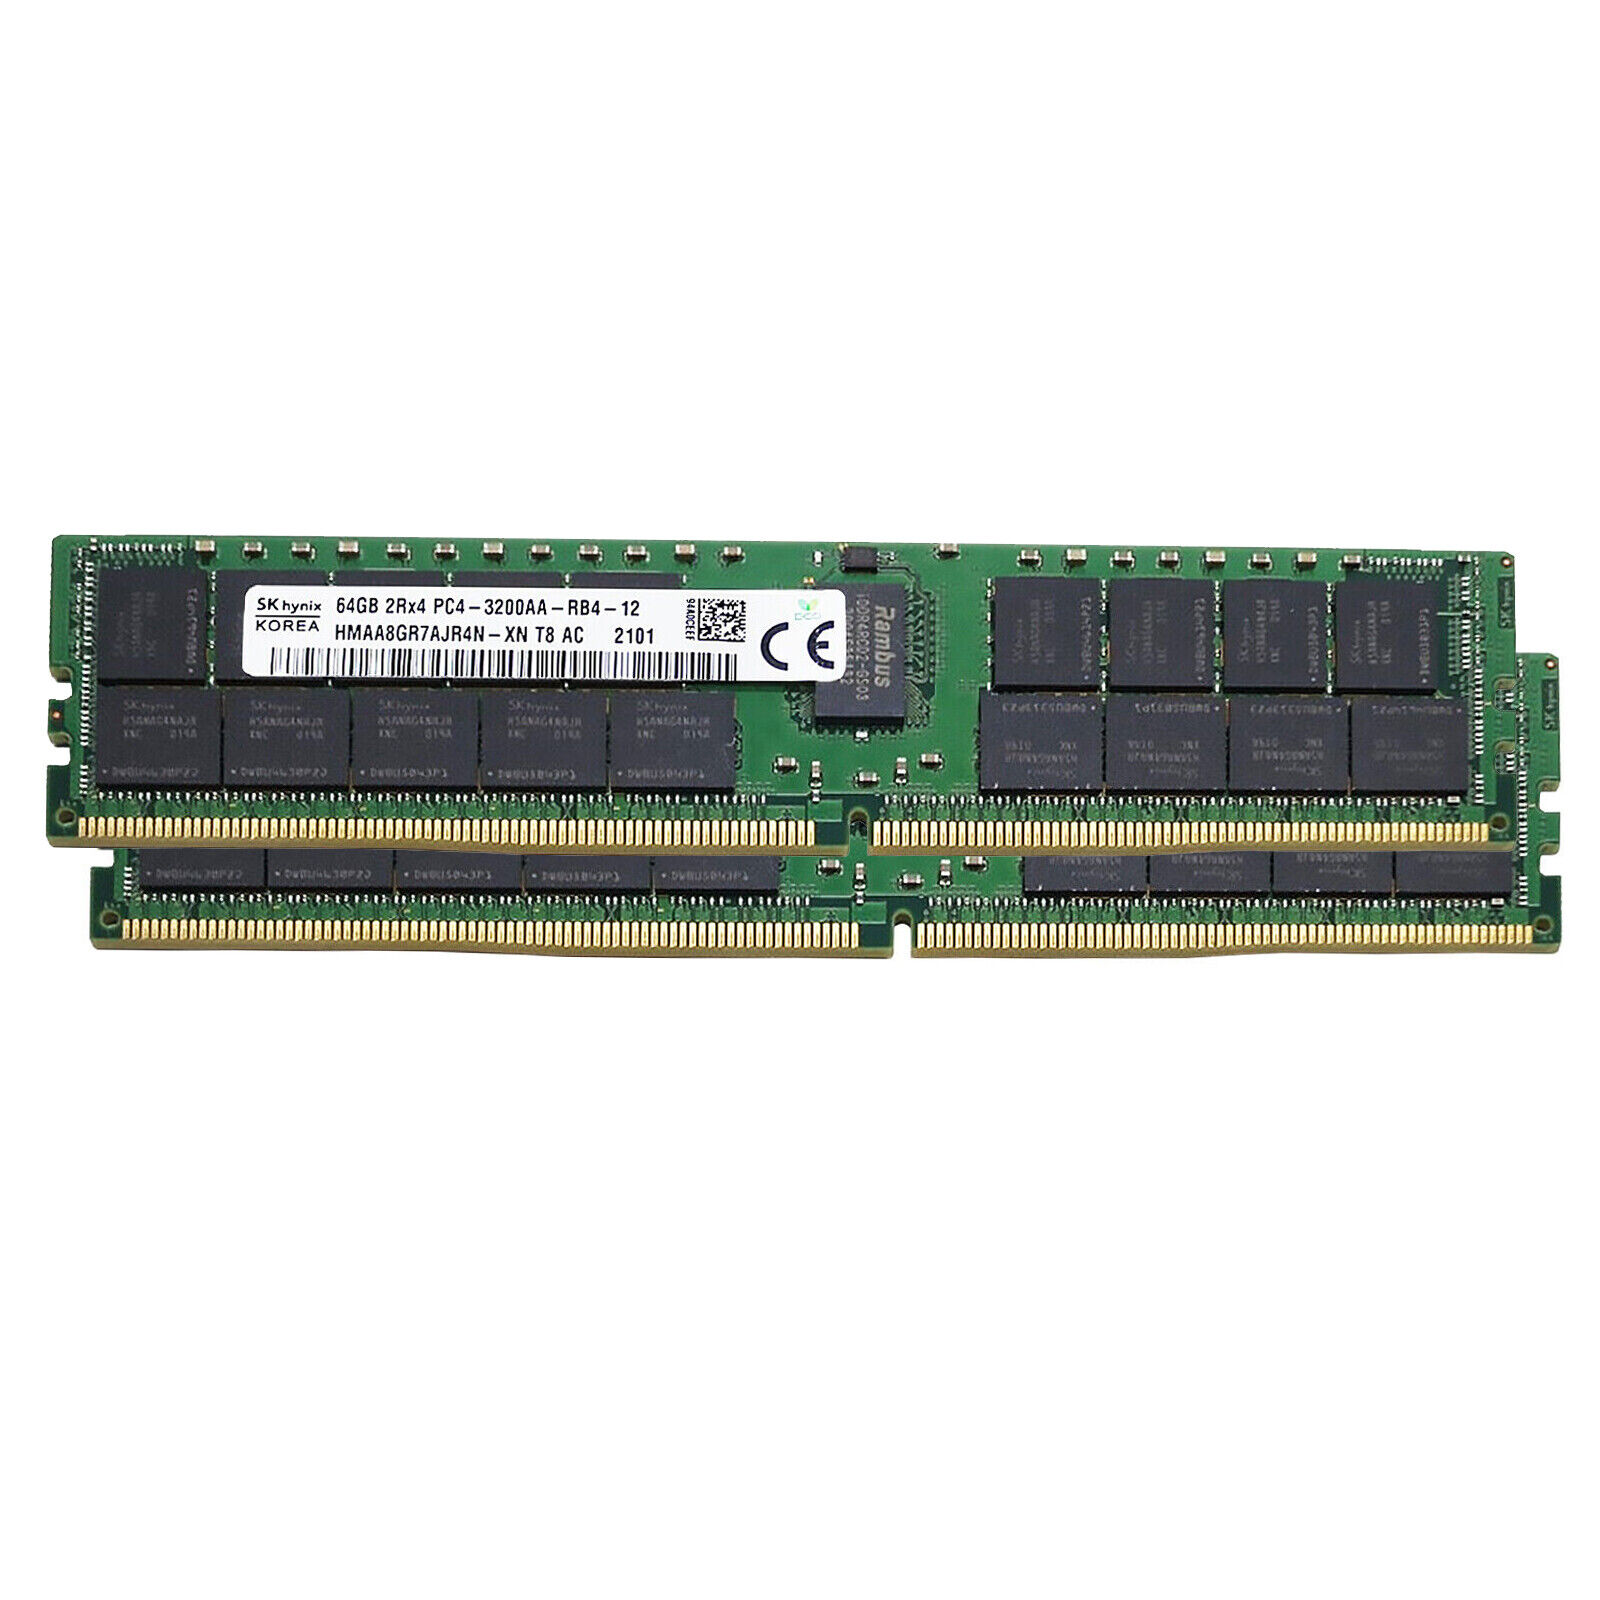 Hynix Kit 128GB (2x 64GB) DDR4 3200MHz 2RX4 REG Server Memory HMAA8GR7AJR4N-XN